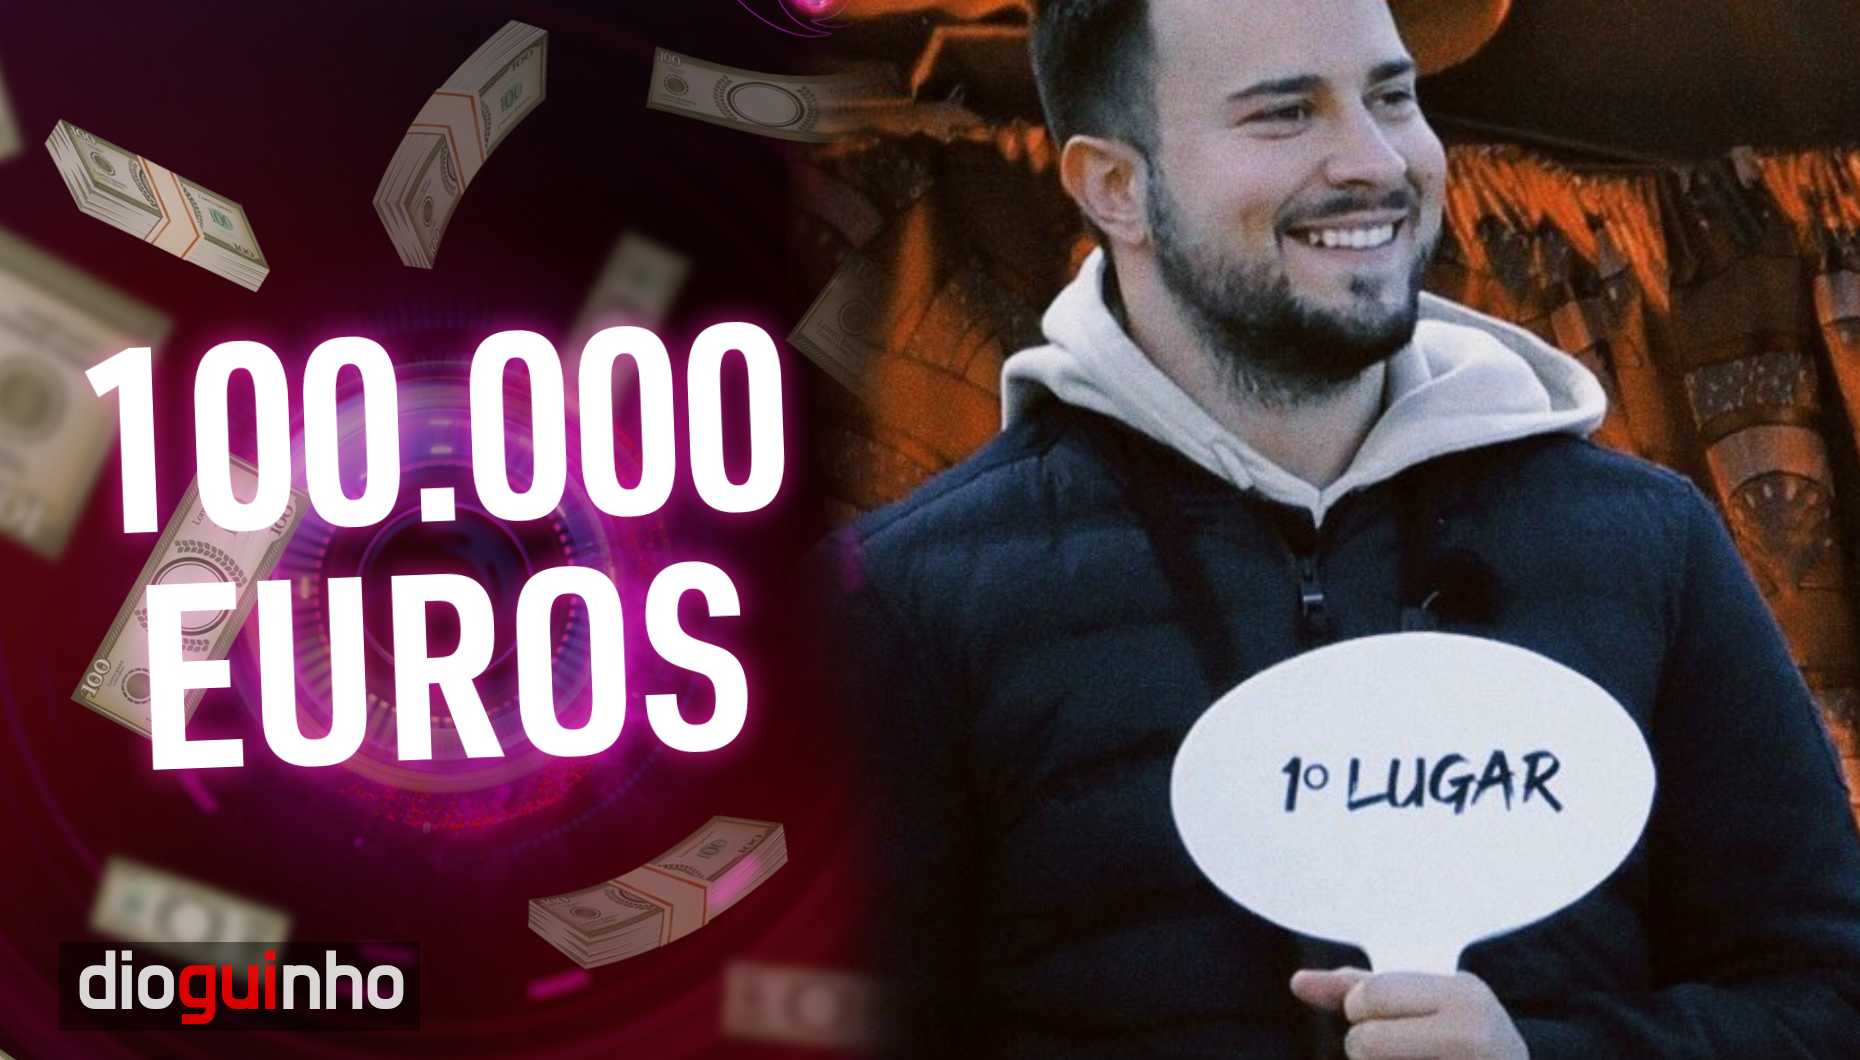 Francisco Monteiro (naturalmente) vence o Big Brother 2023 e leva 100 mil euros para casa